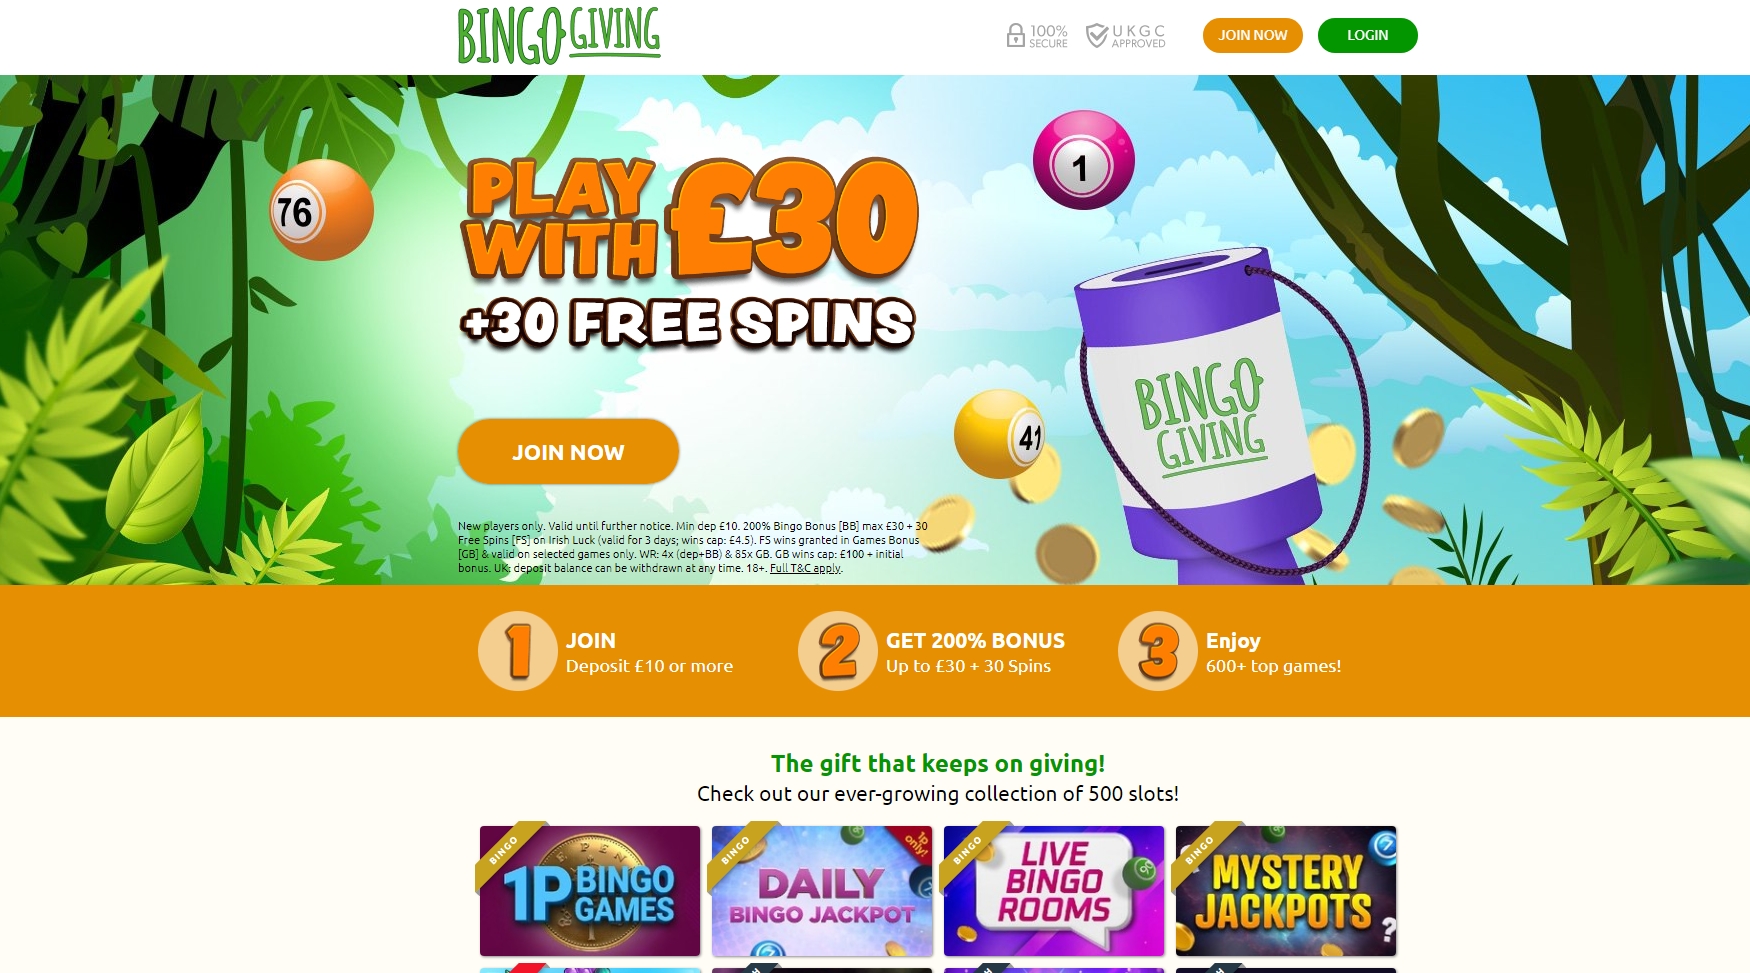 Bingo Giving Casino No Deposit Bonus